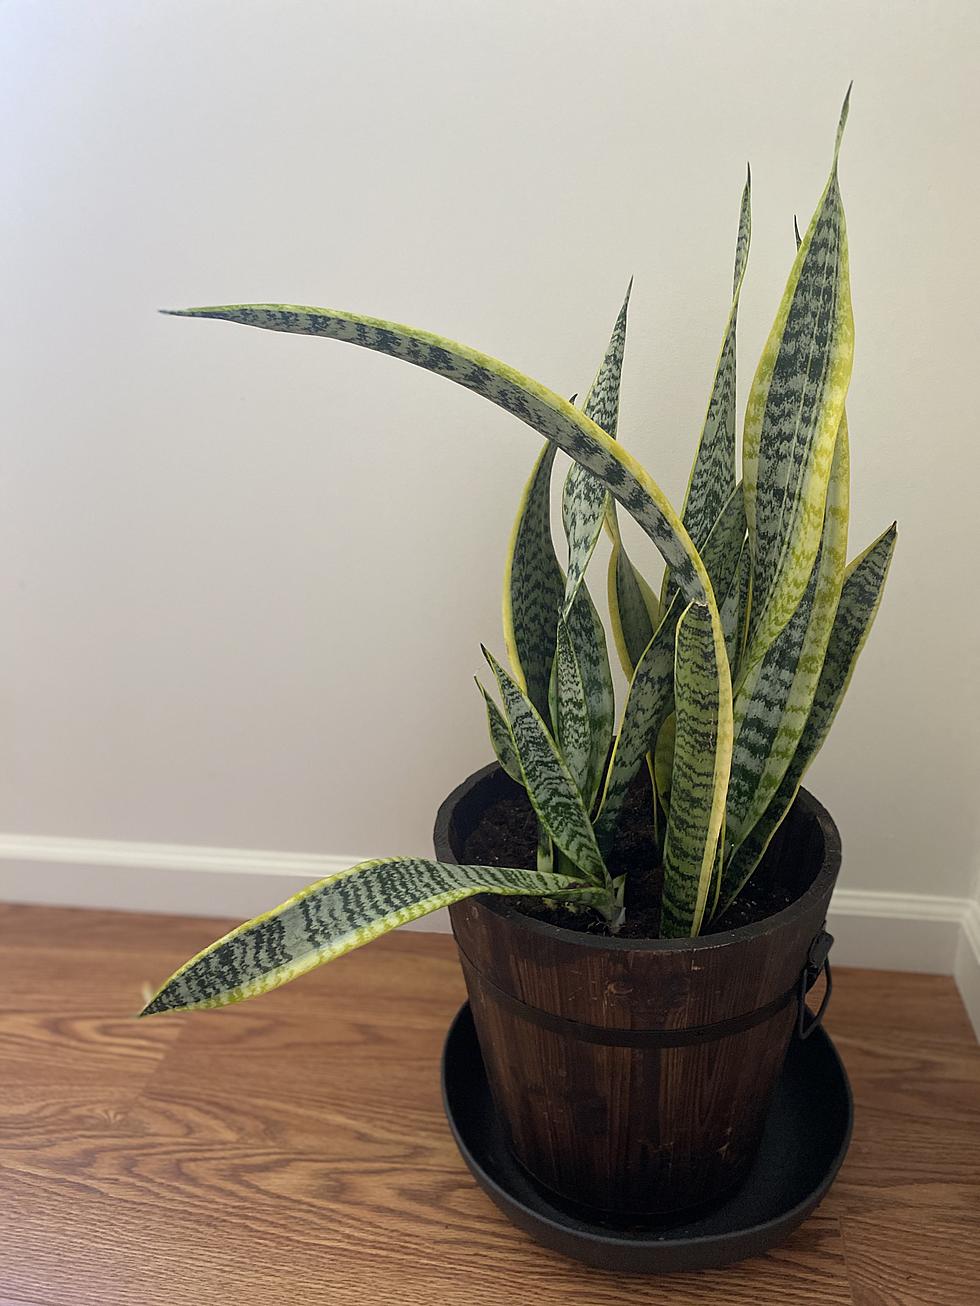 Just Call Me a Crazy Plant Lady: Meet Kari's House Plants